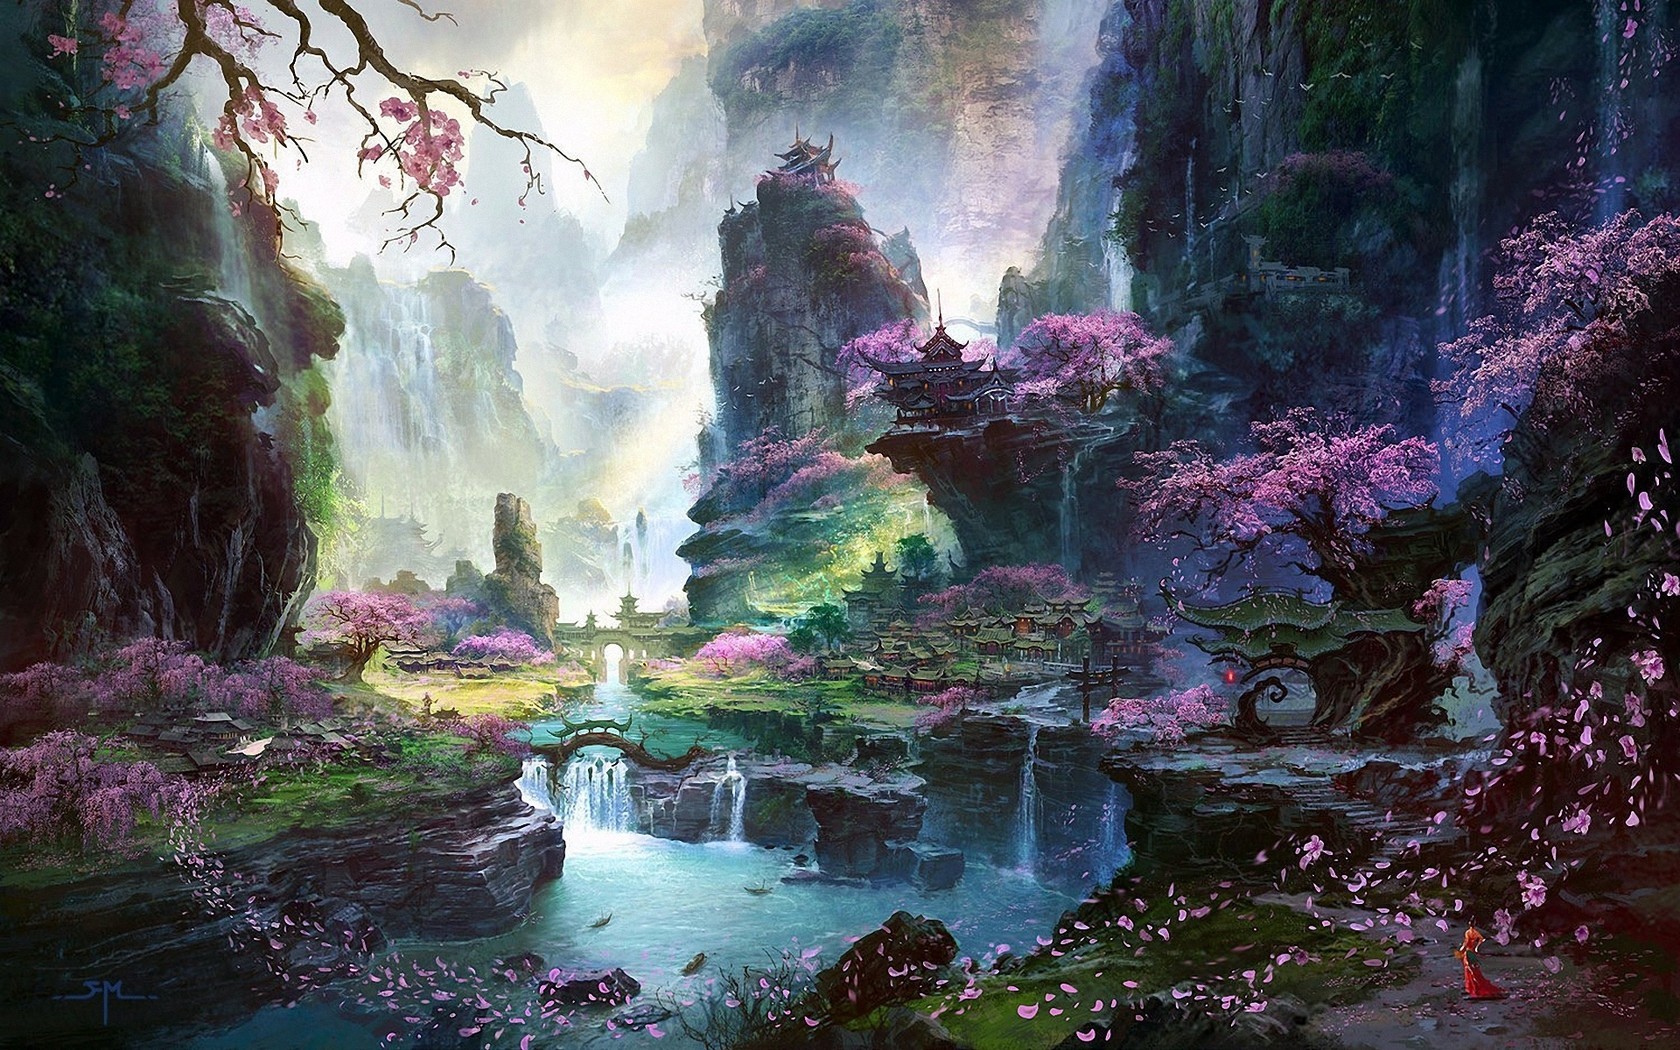 General 1680x1050 fantasy art cherry blossom artwork mountains rocks plants nature landscape